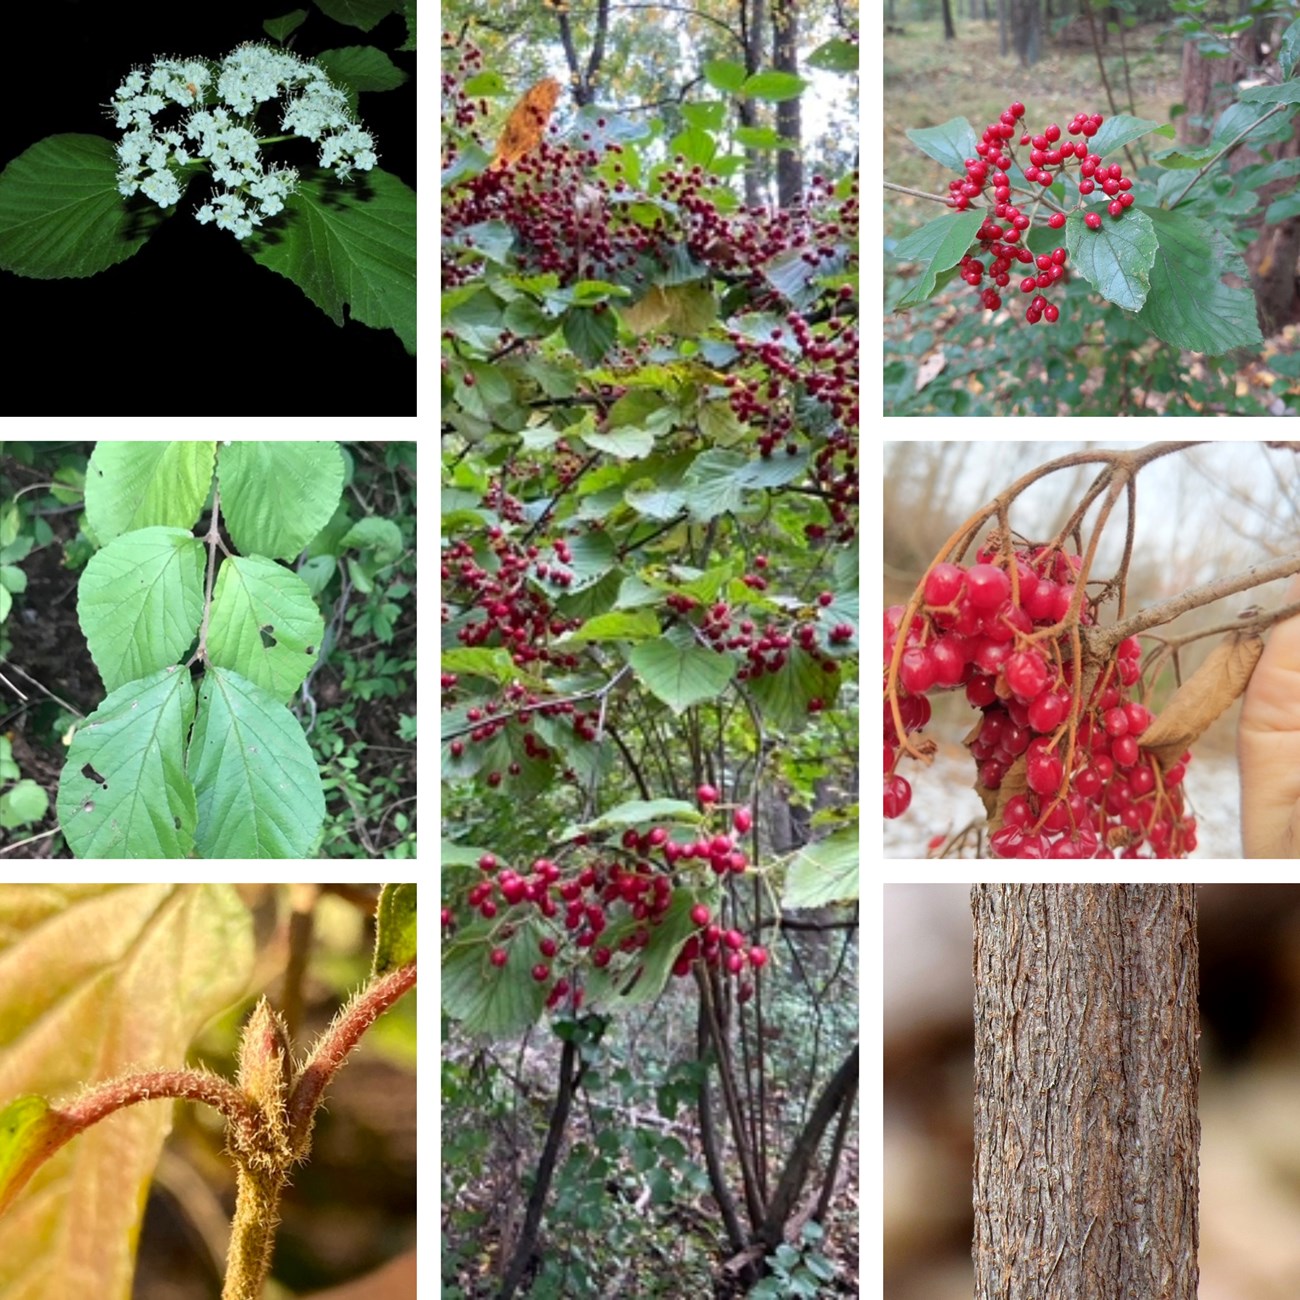 collage of linden arrowwood viburnum photos showing flowers, fruit, bark, buds, and leaves